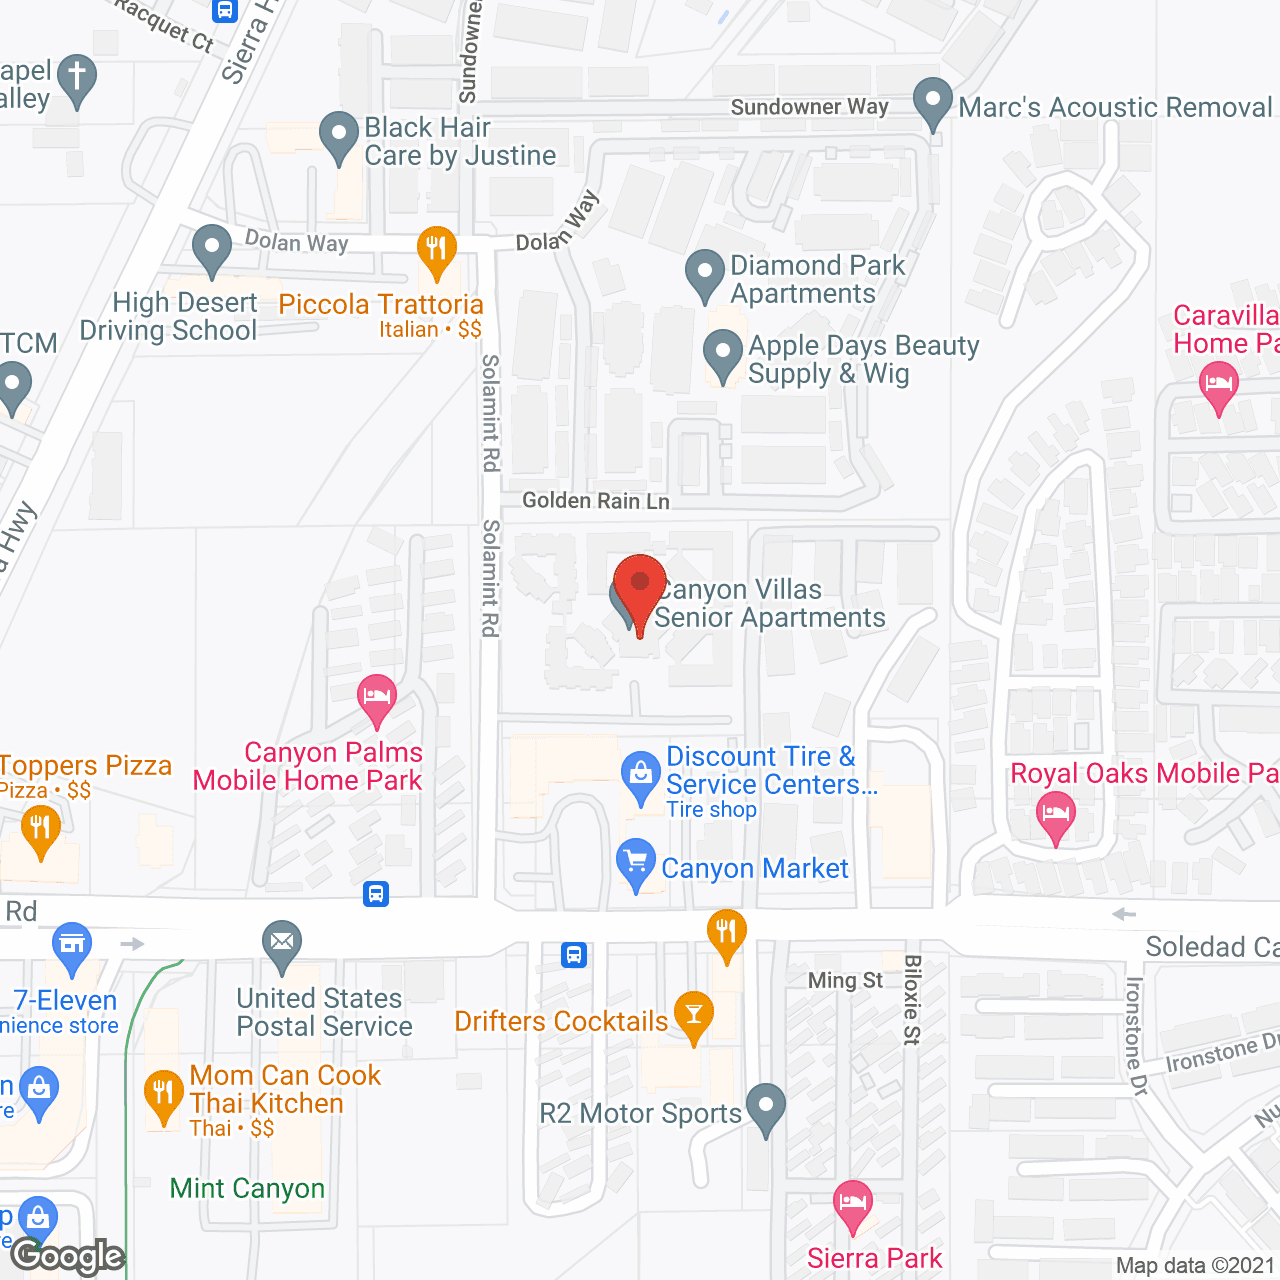 Canyon Villas Apartments in google map